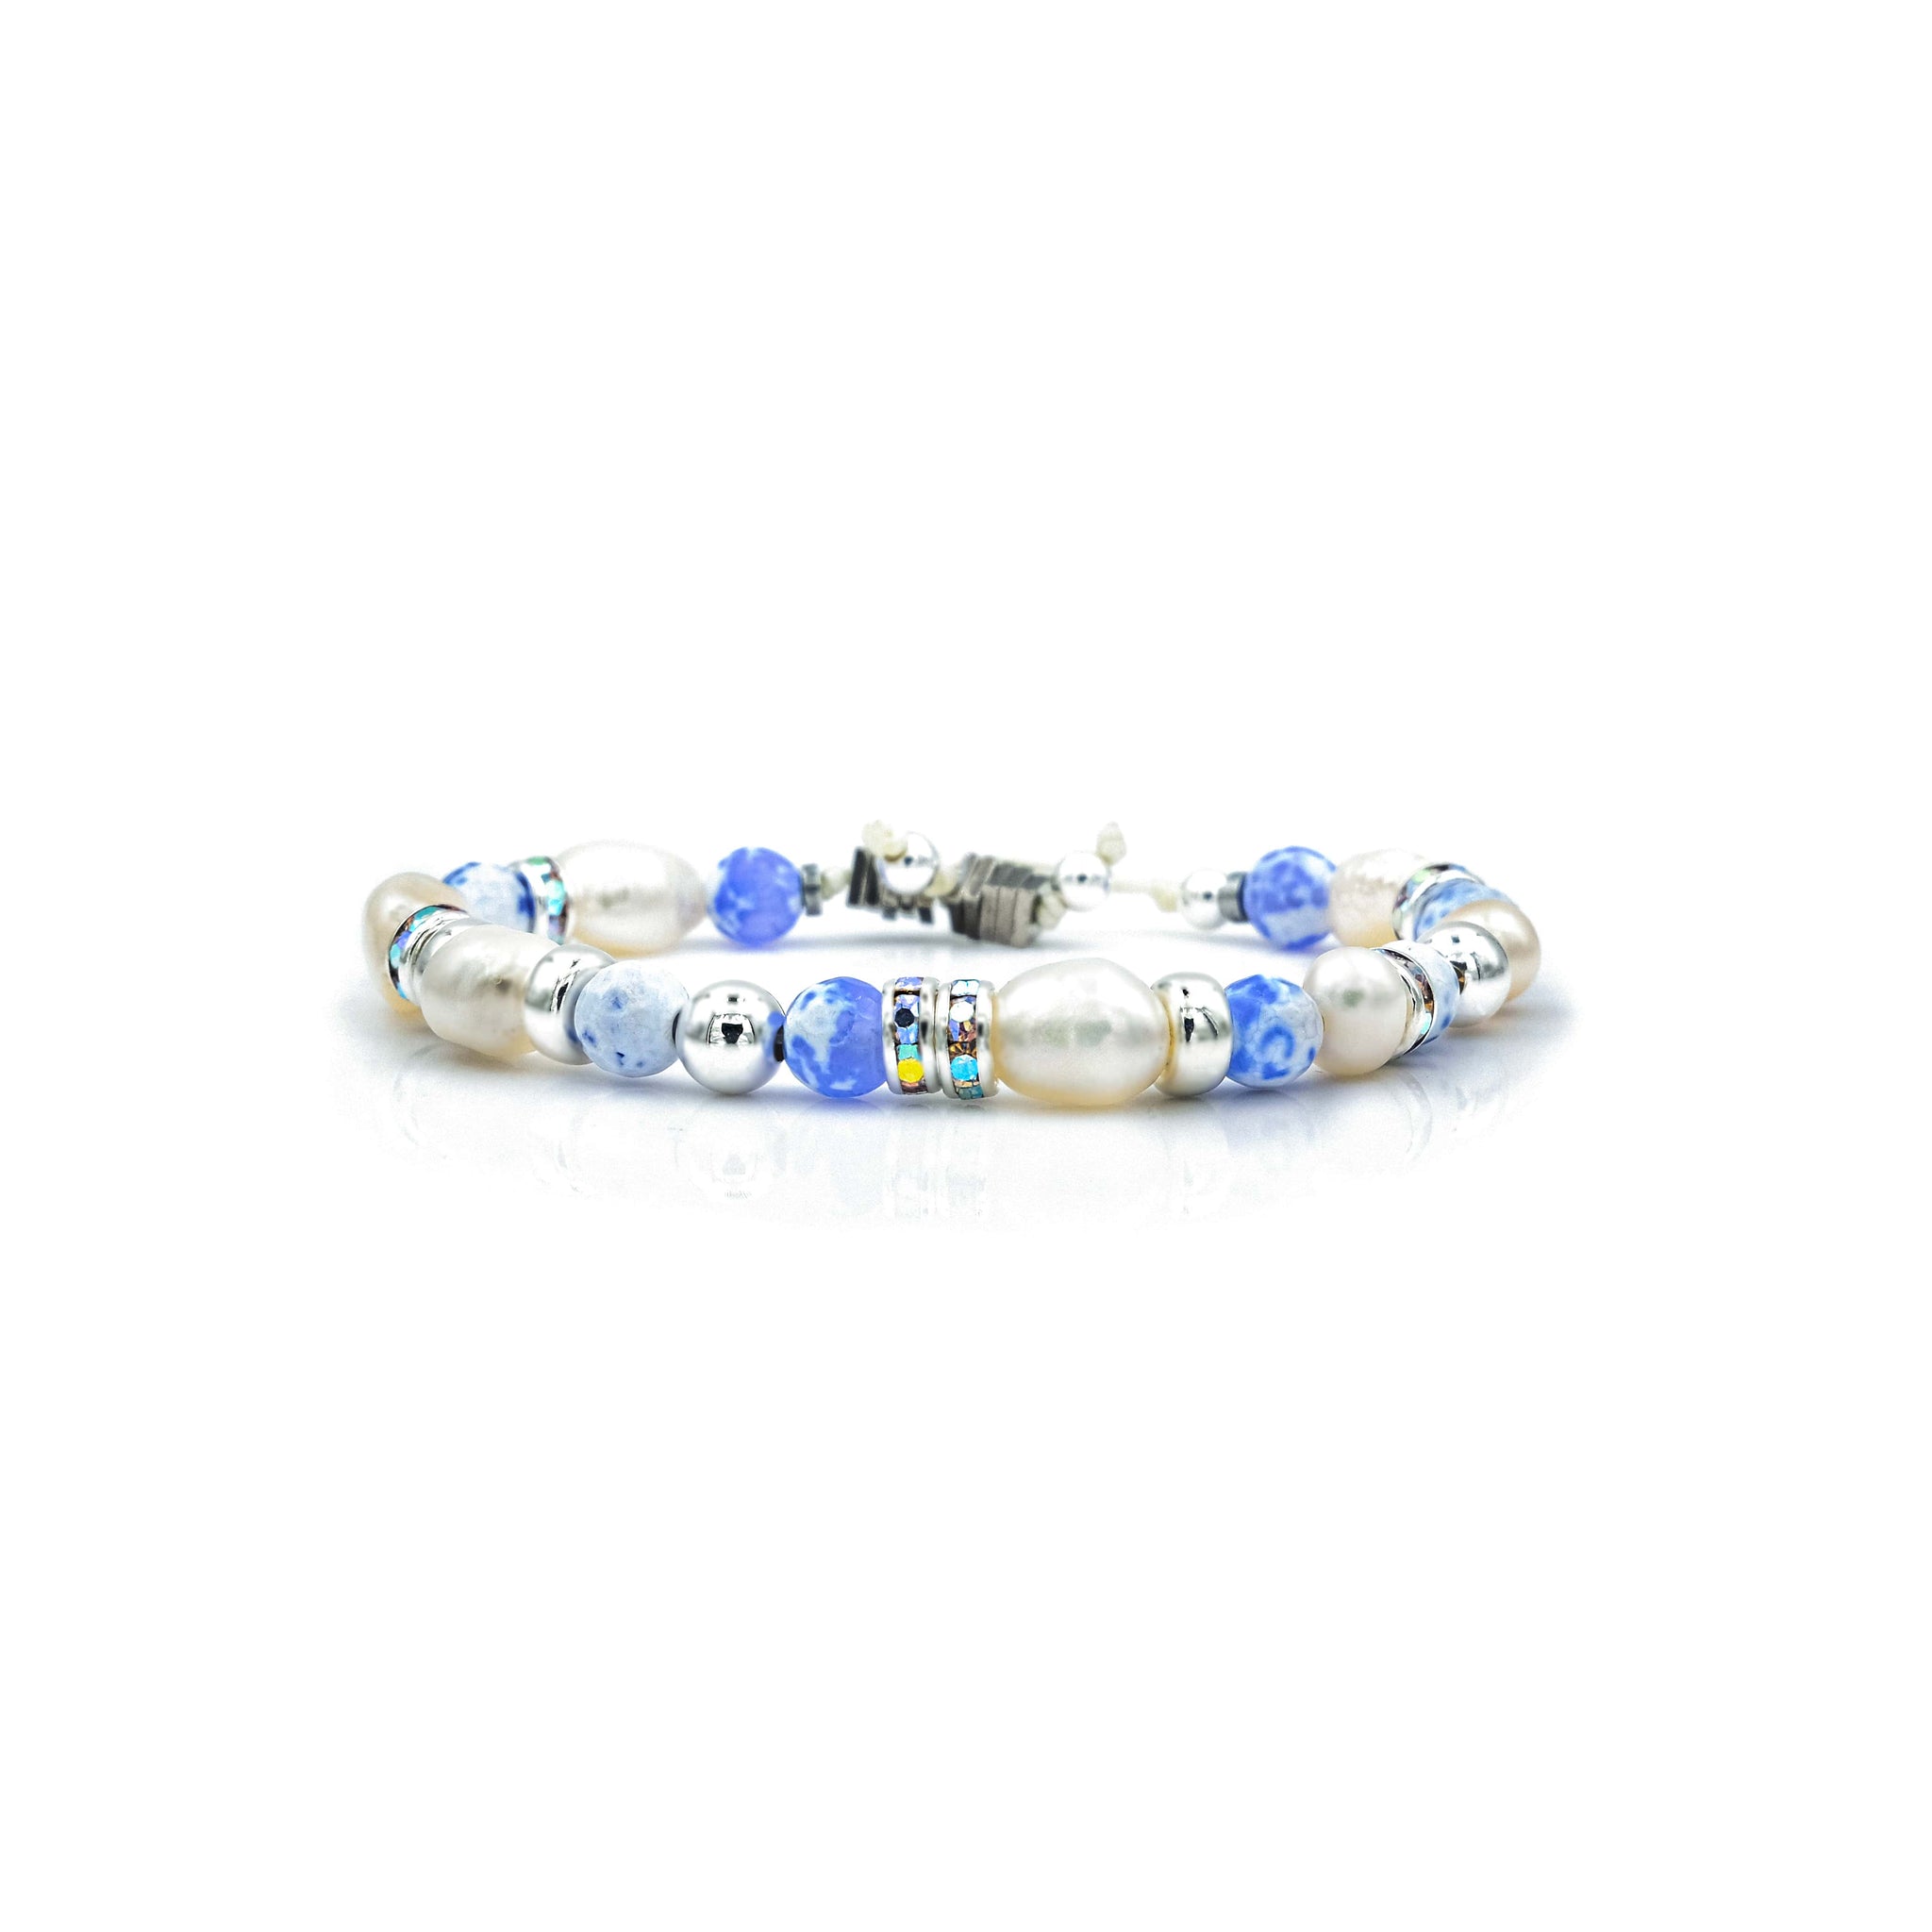 Handcrafted designer stone vibe jewelry agate pearl bracelet - popvibe